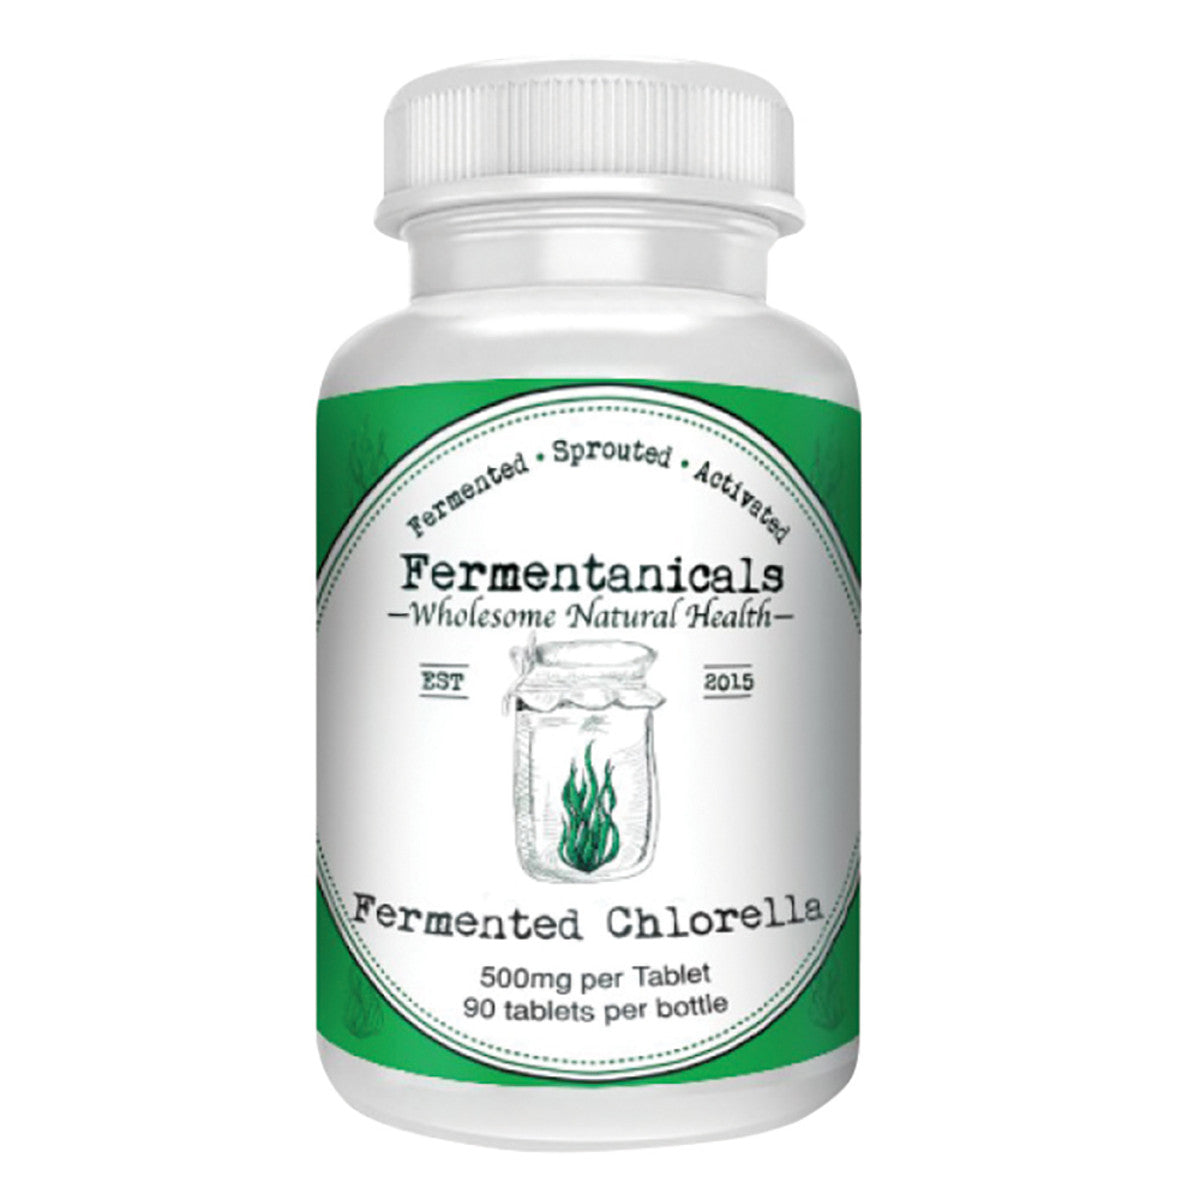 Fermentanicals - Fermented Chlorella 500mg 90t